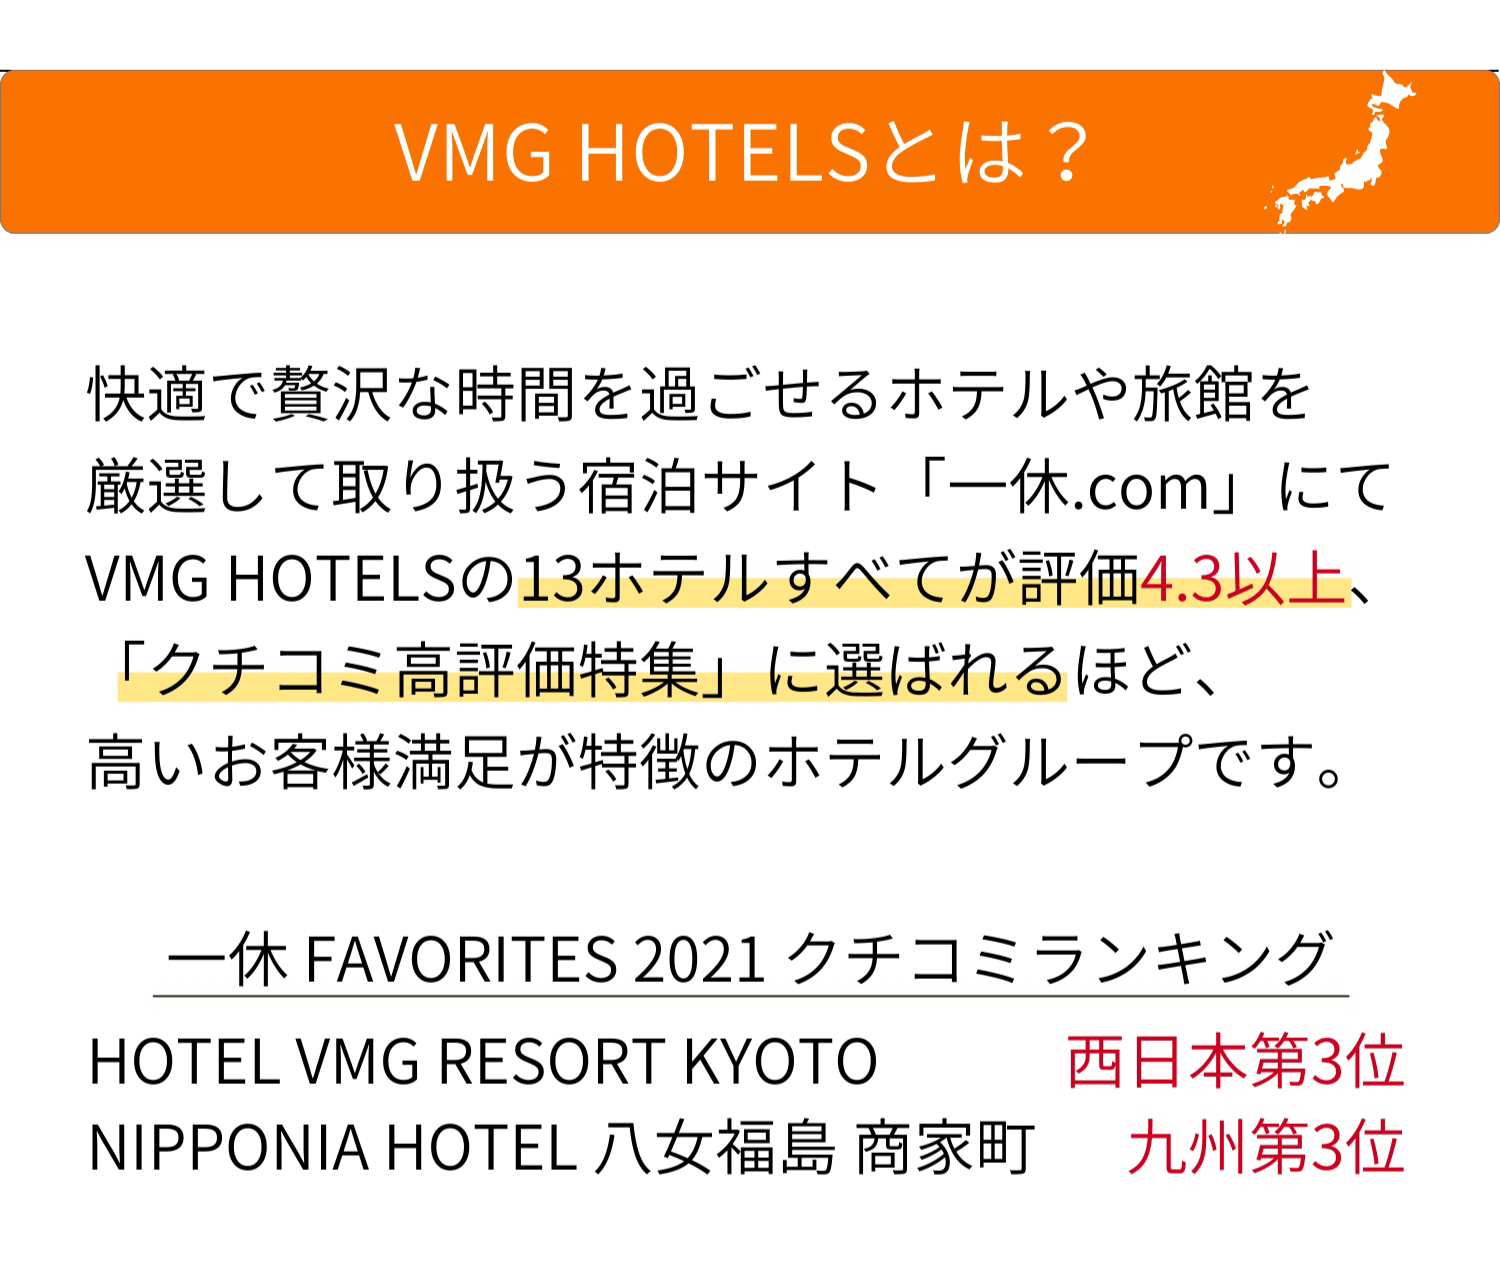 VMG HOTELSとは？